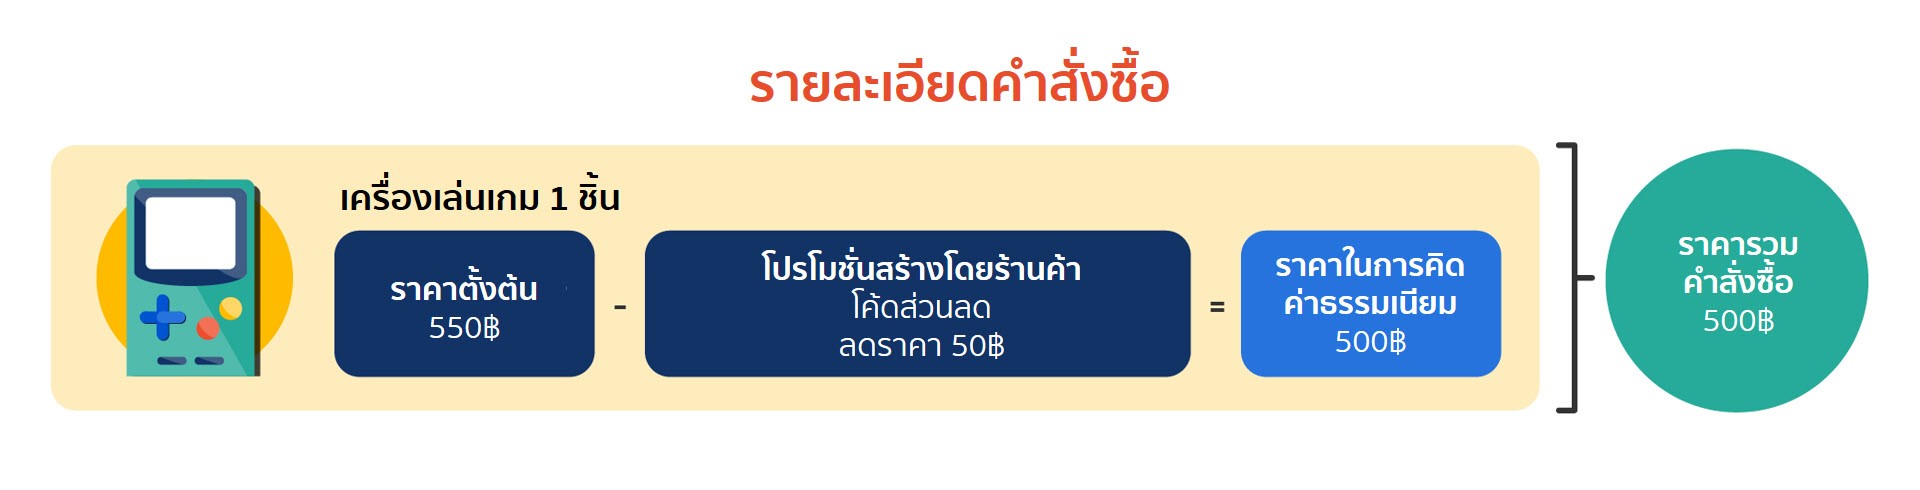 Shopee มีการคำนวณอัตราค่าธรรมเนียมการขาย ค่าธรรมเนียมบริการ และค่าธรรมเนียมธุรกรรมอย่างไร  ? | ศูนย์เรียนรู้ผู้ขาย Shopee Thailand